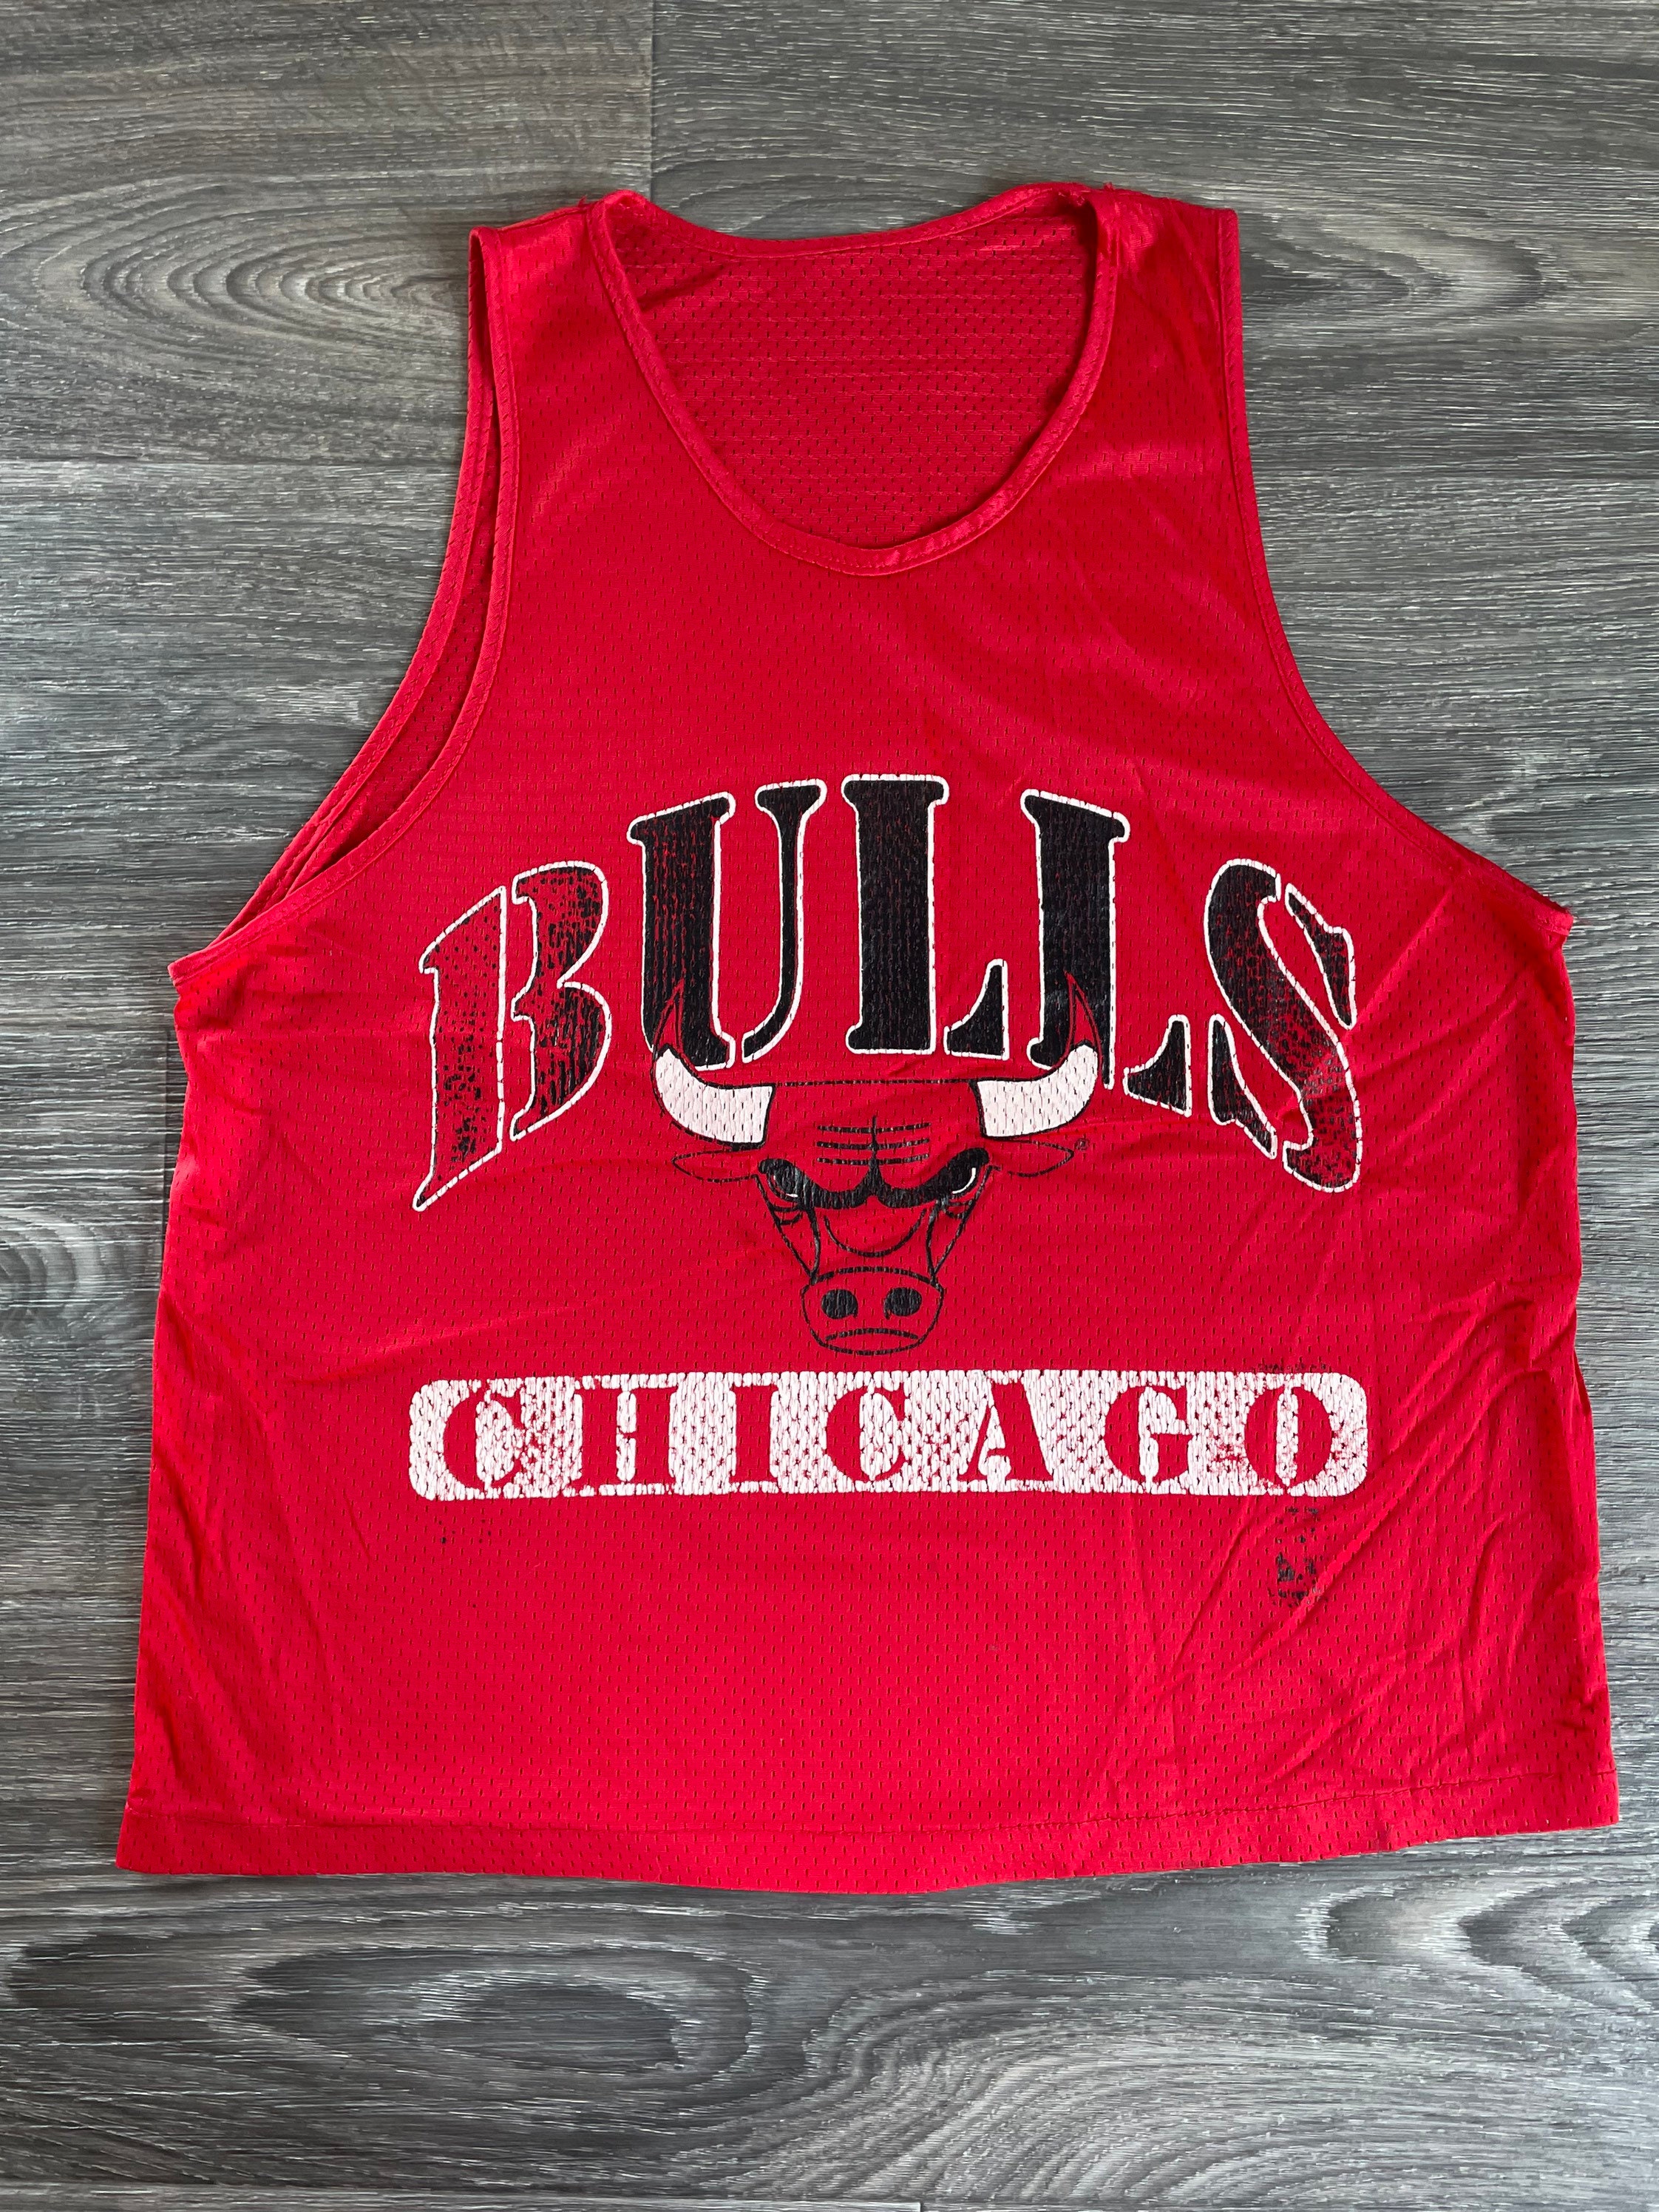 CHICAGO BULLS Vintage 90s Champion NBA Michael Jordan Warm up 